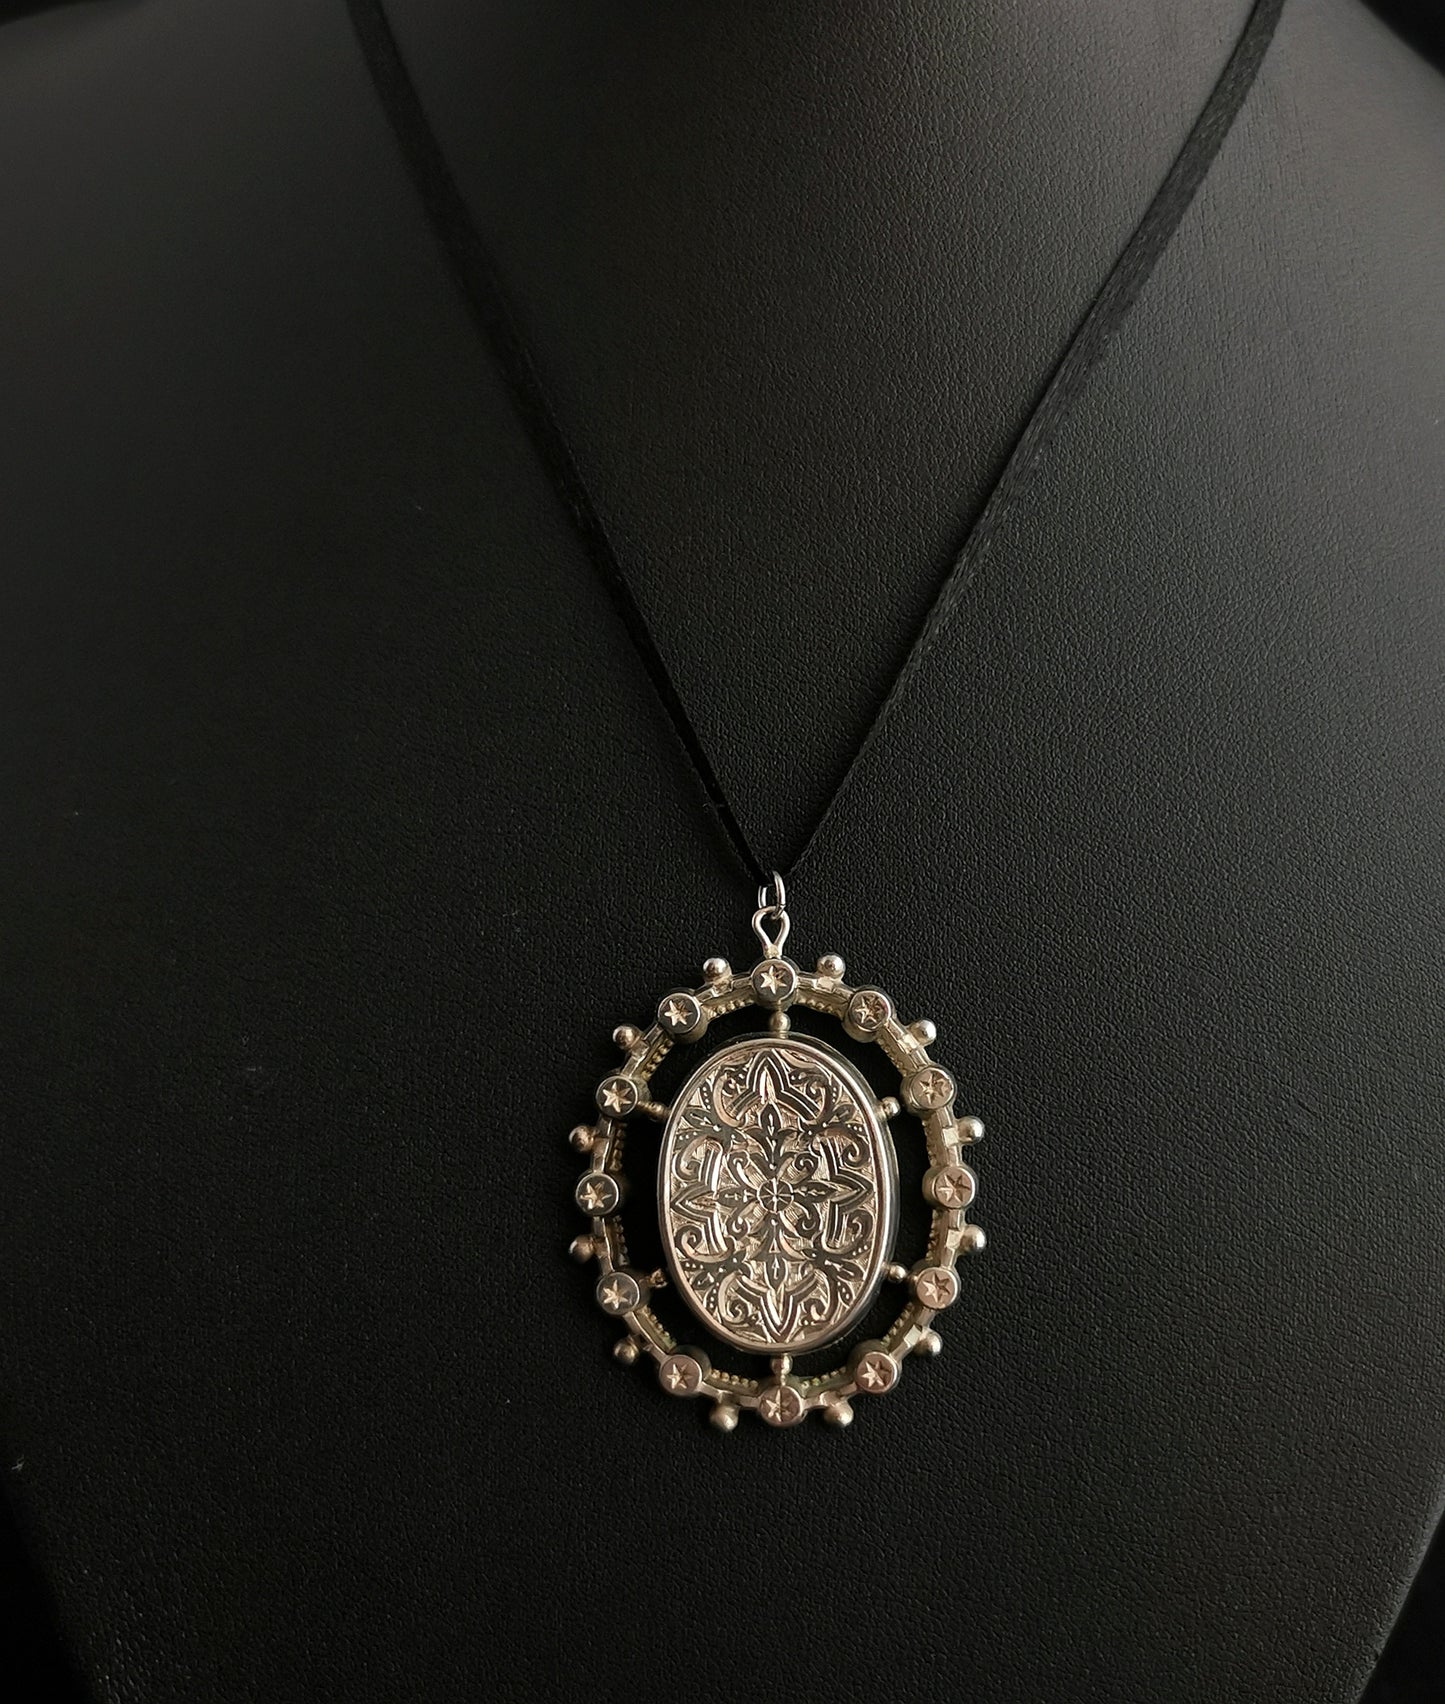 Victorian silver pendant, aesthetic era, engraved